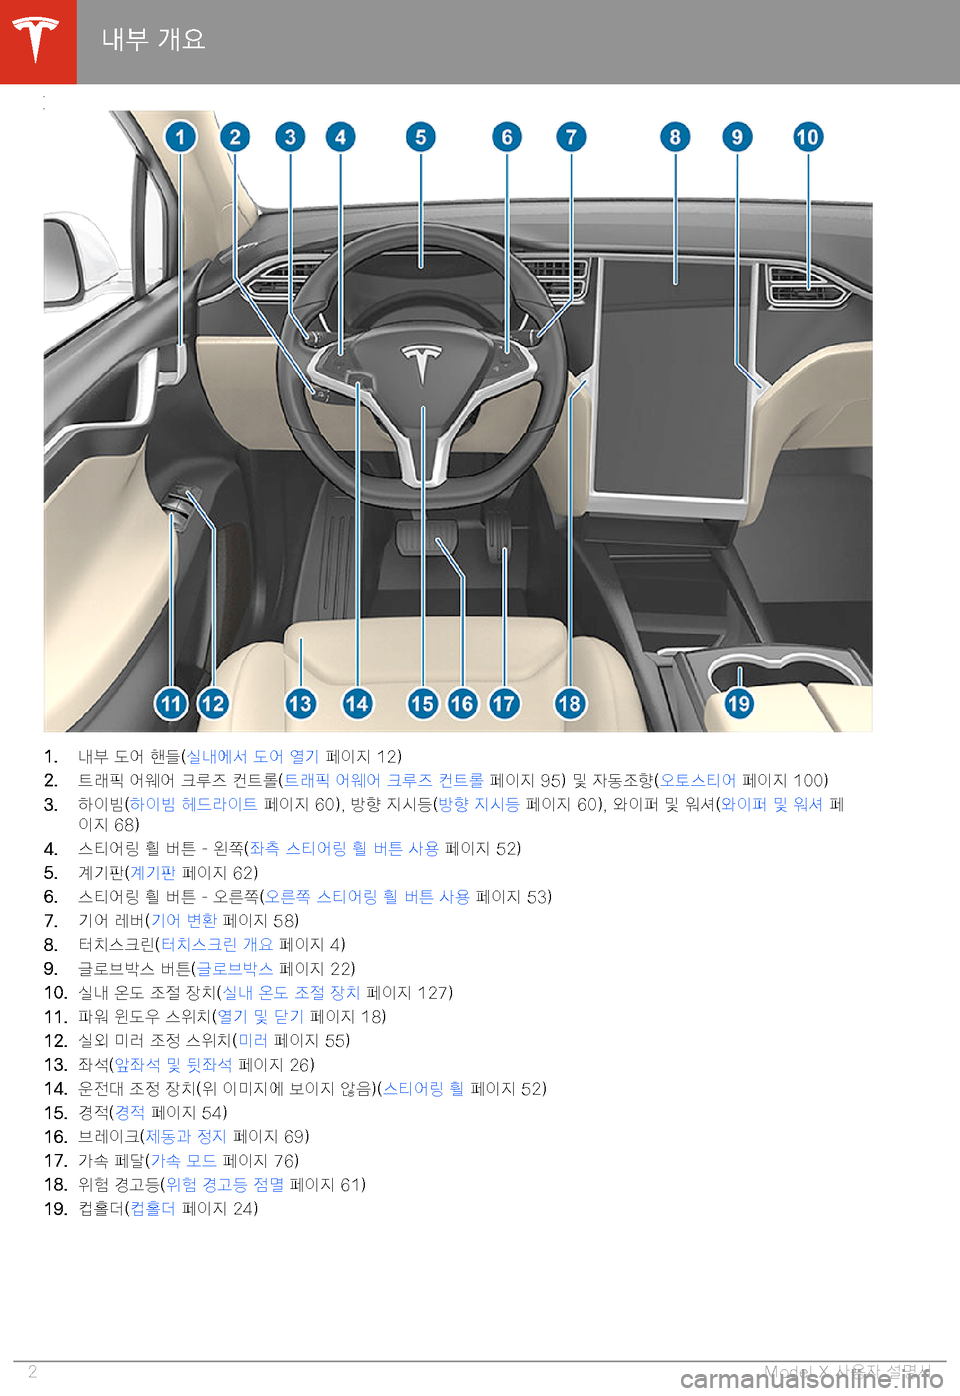 TESLA MODEL X 2020  사용자 가이드 (in Korean)  "9